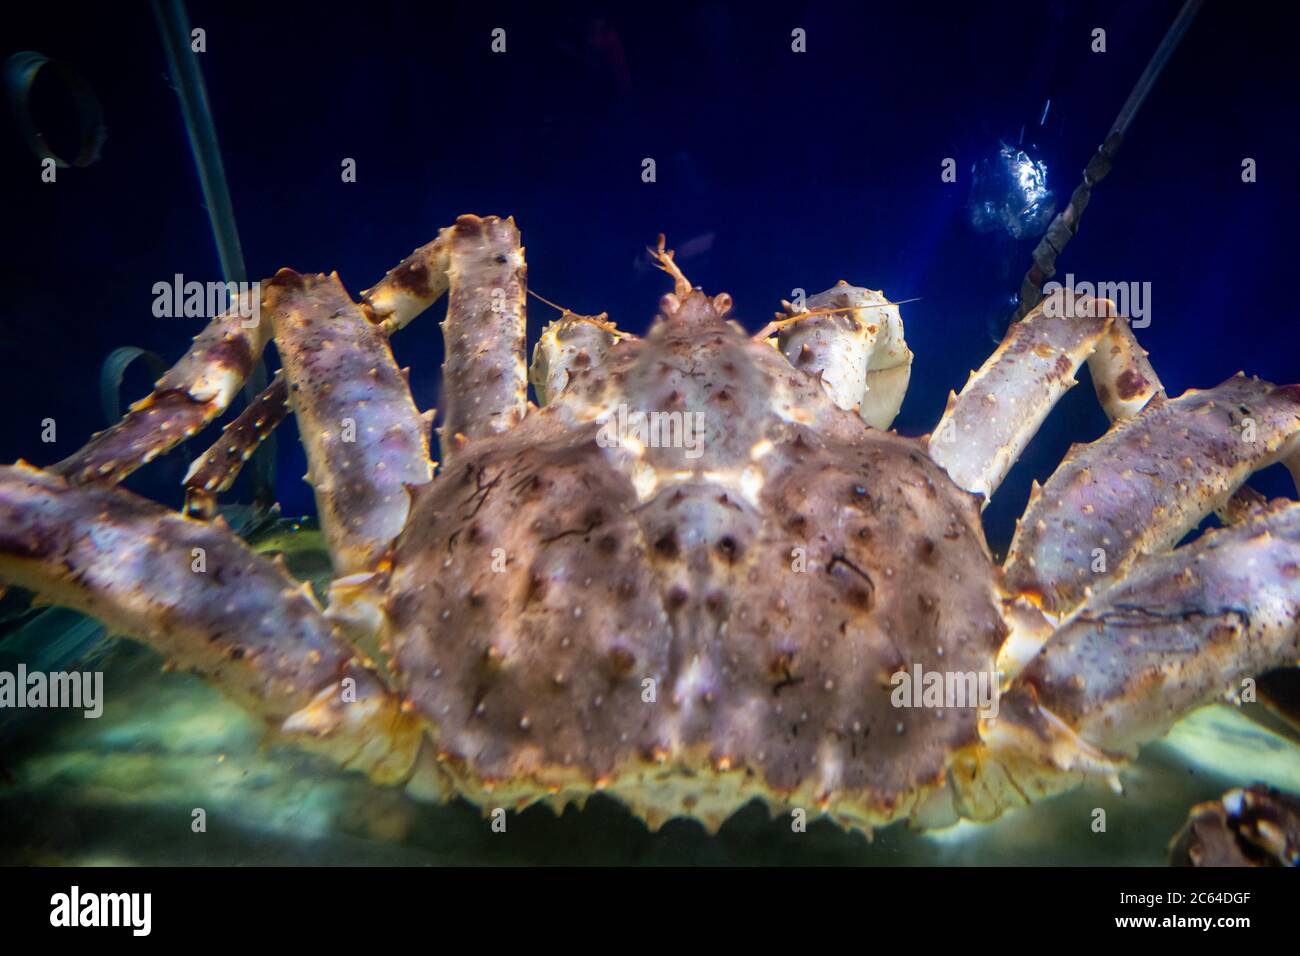 Alaska Spider Crab inside an aquarium. Selective focusing Stock Photo